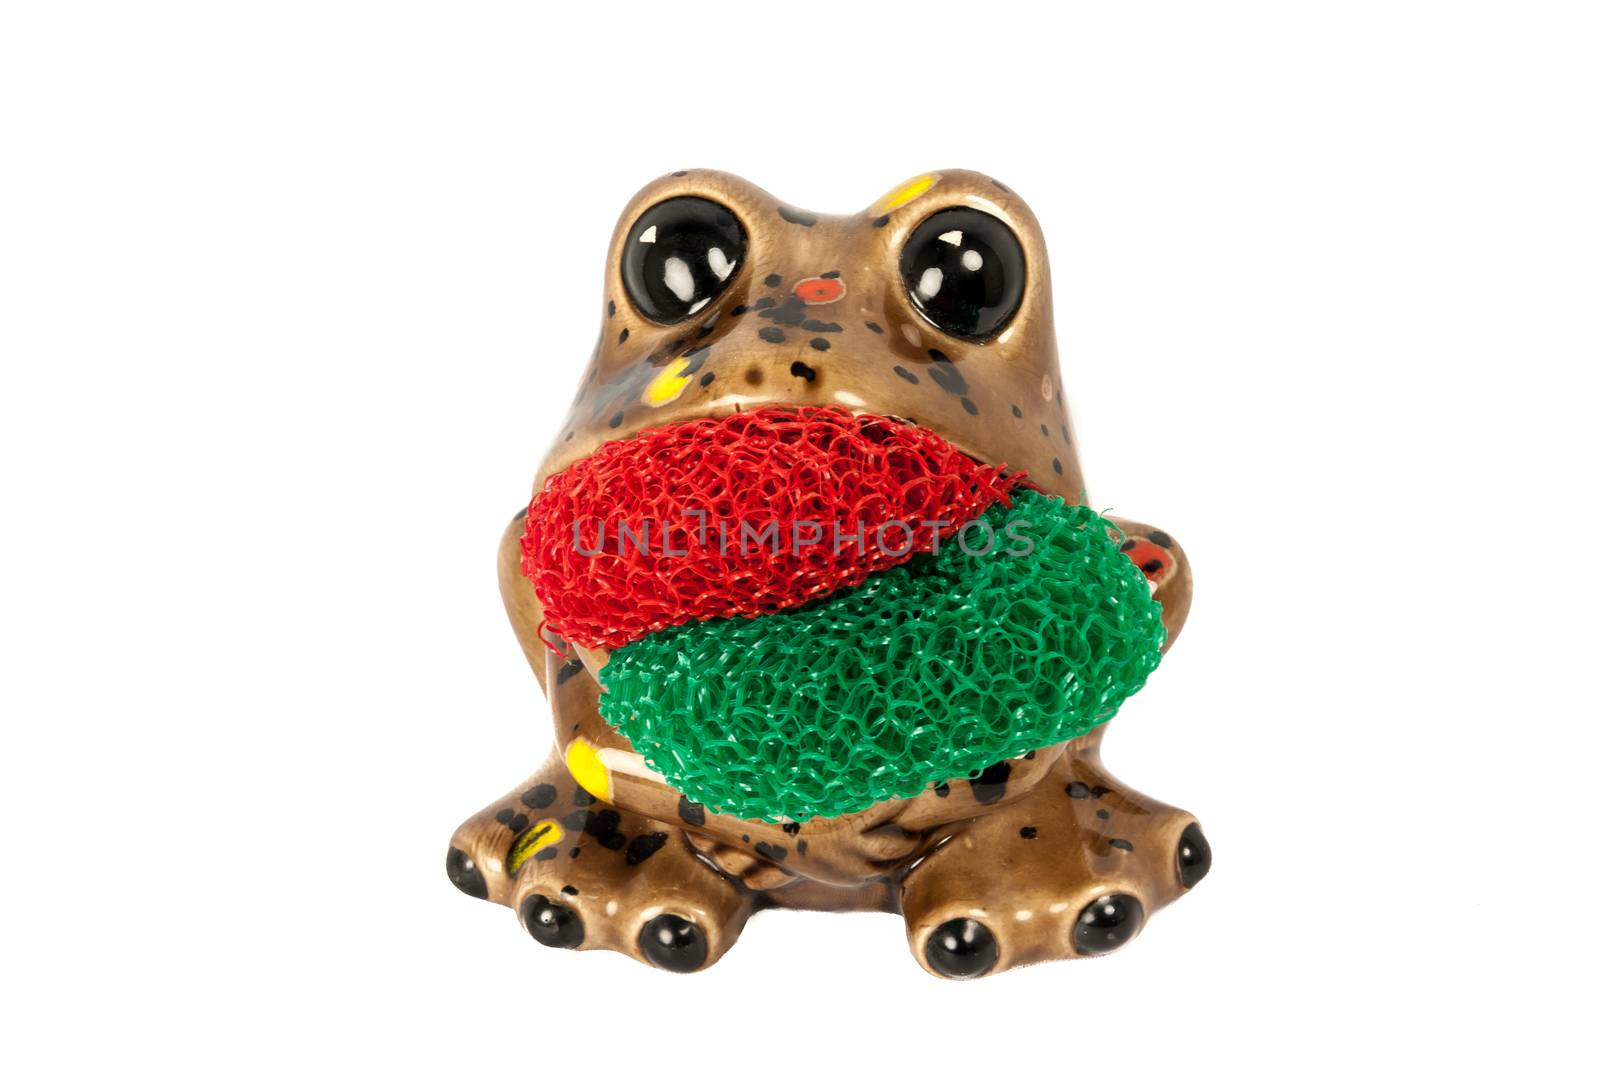 Frog Scrubby Holder by michael_fox